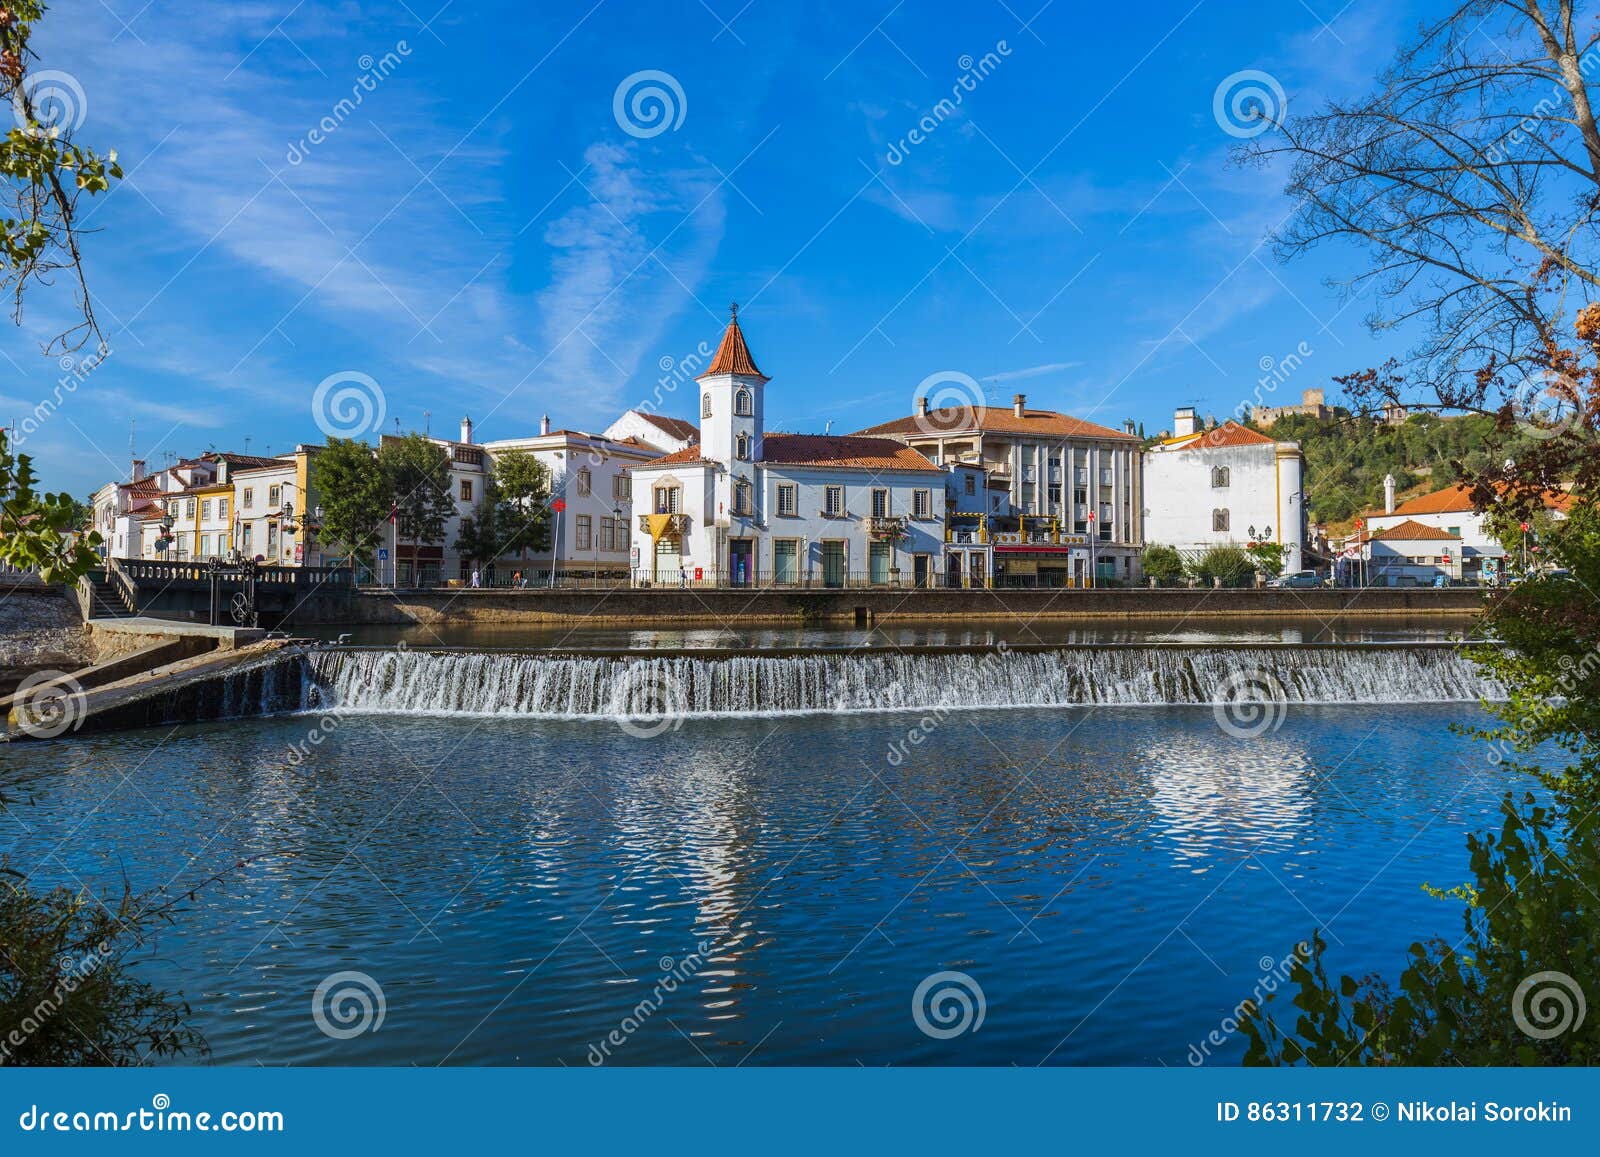 town tomar - portugal